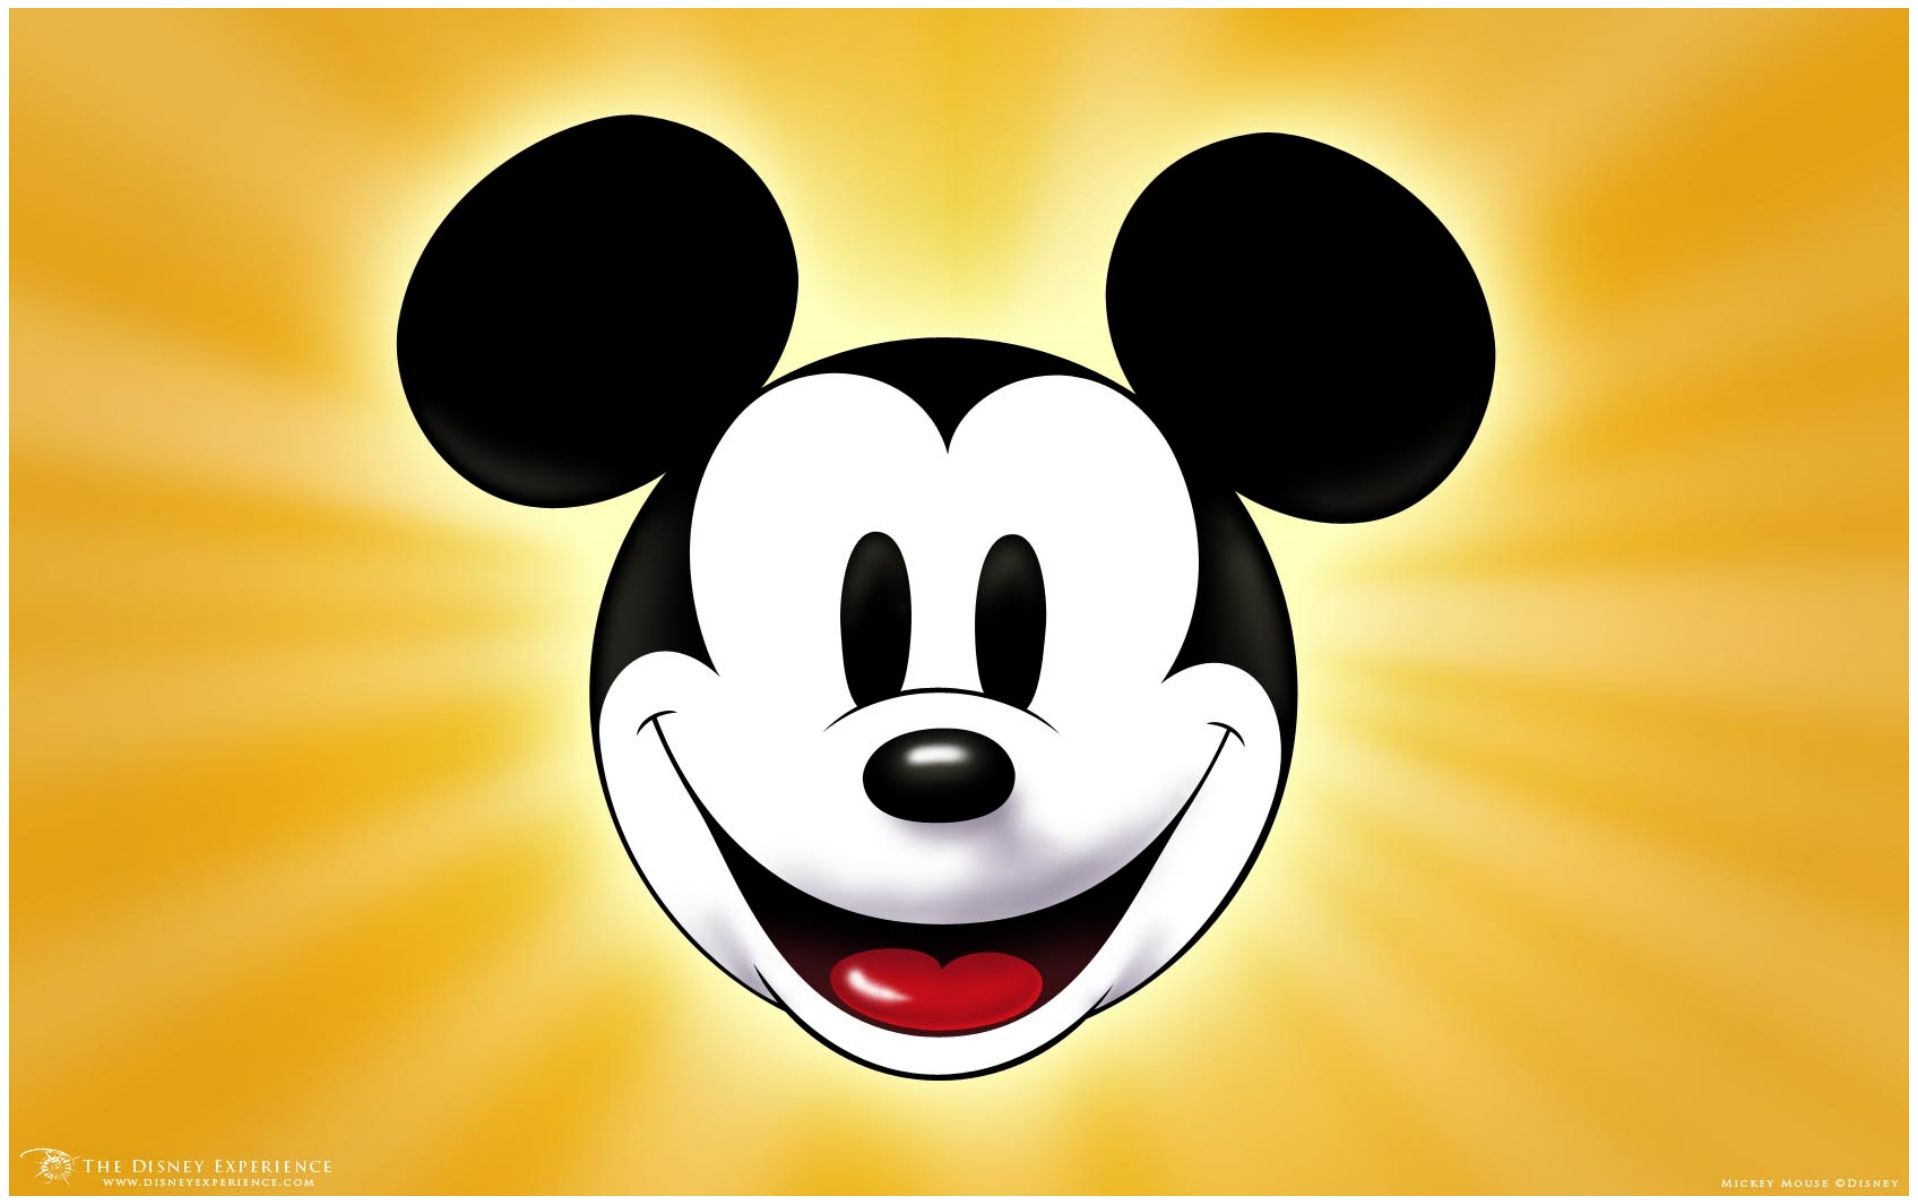 Disney Project: Mickey Mouse Cartoons HD Wallpaper Download HD Walls